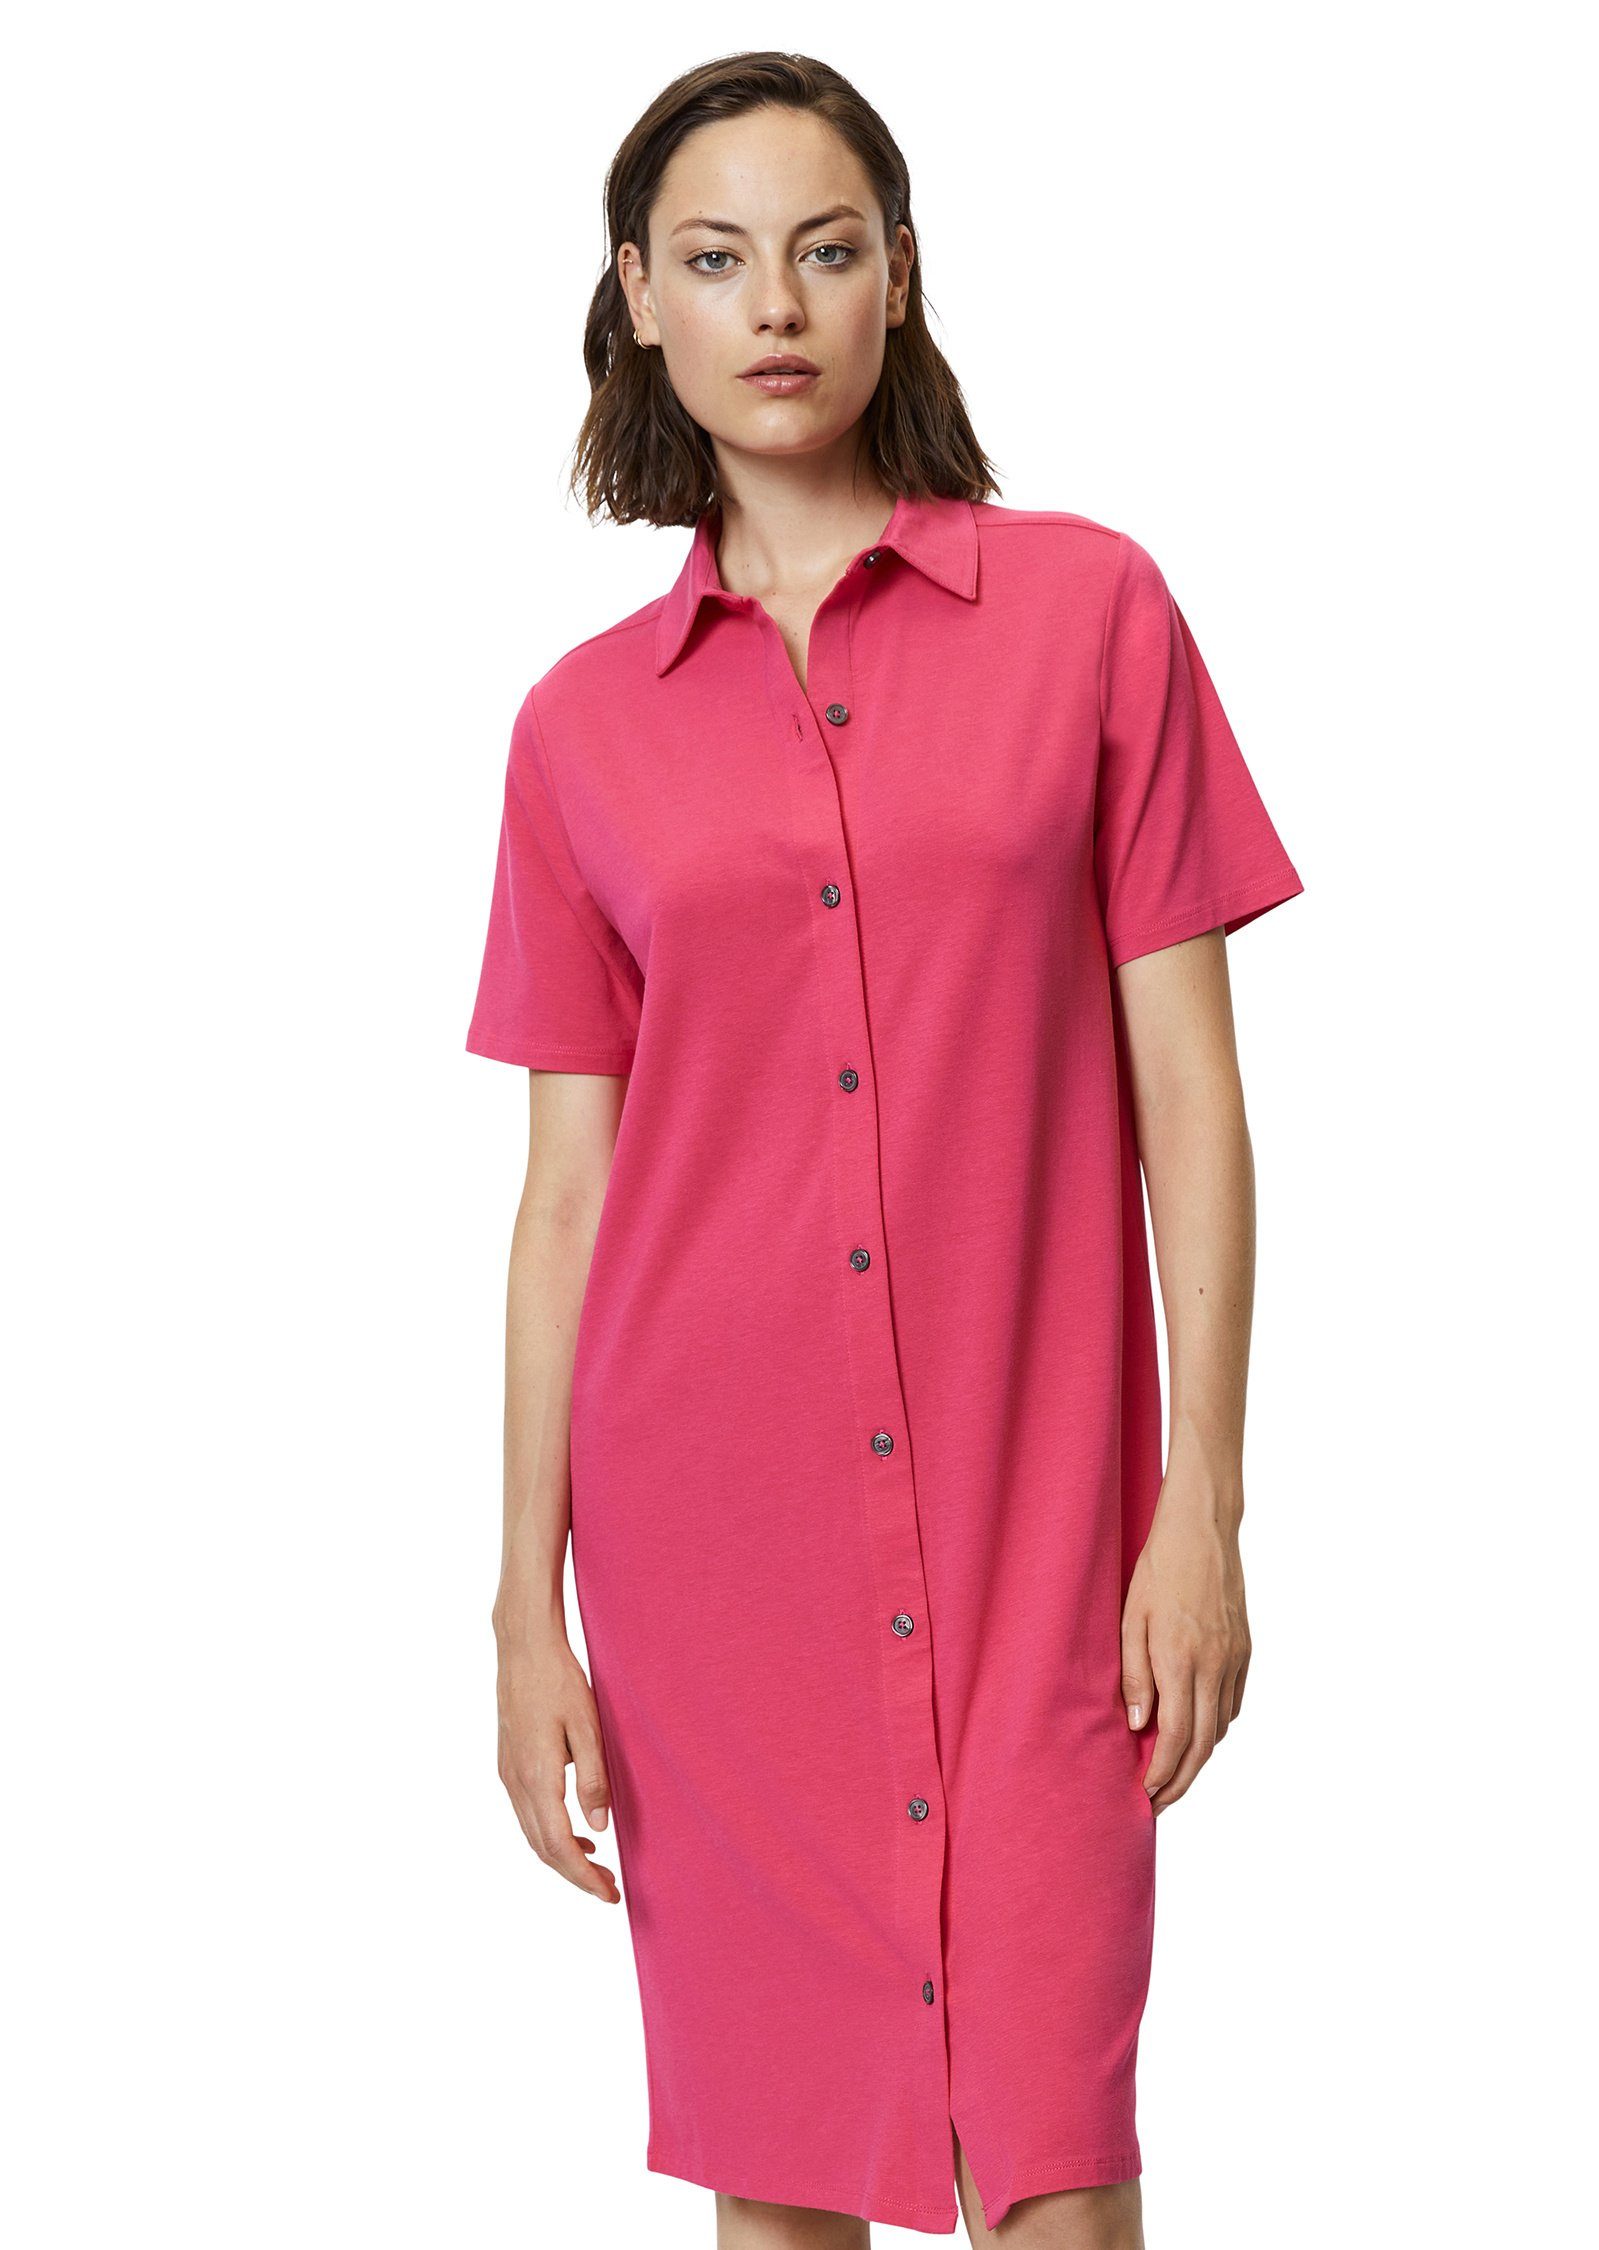 Marc O'Polo Blusenkleid aus stretchigem Modal-Organic-Cotton-Mix rosa | Sweatkleider